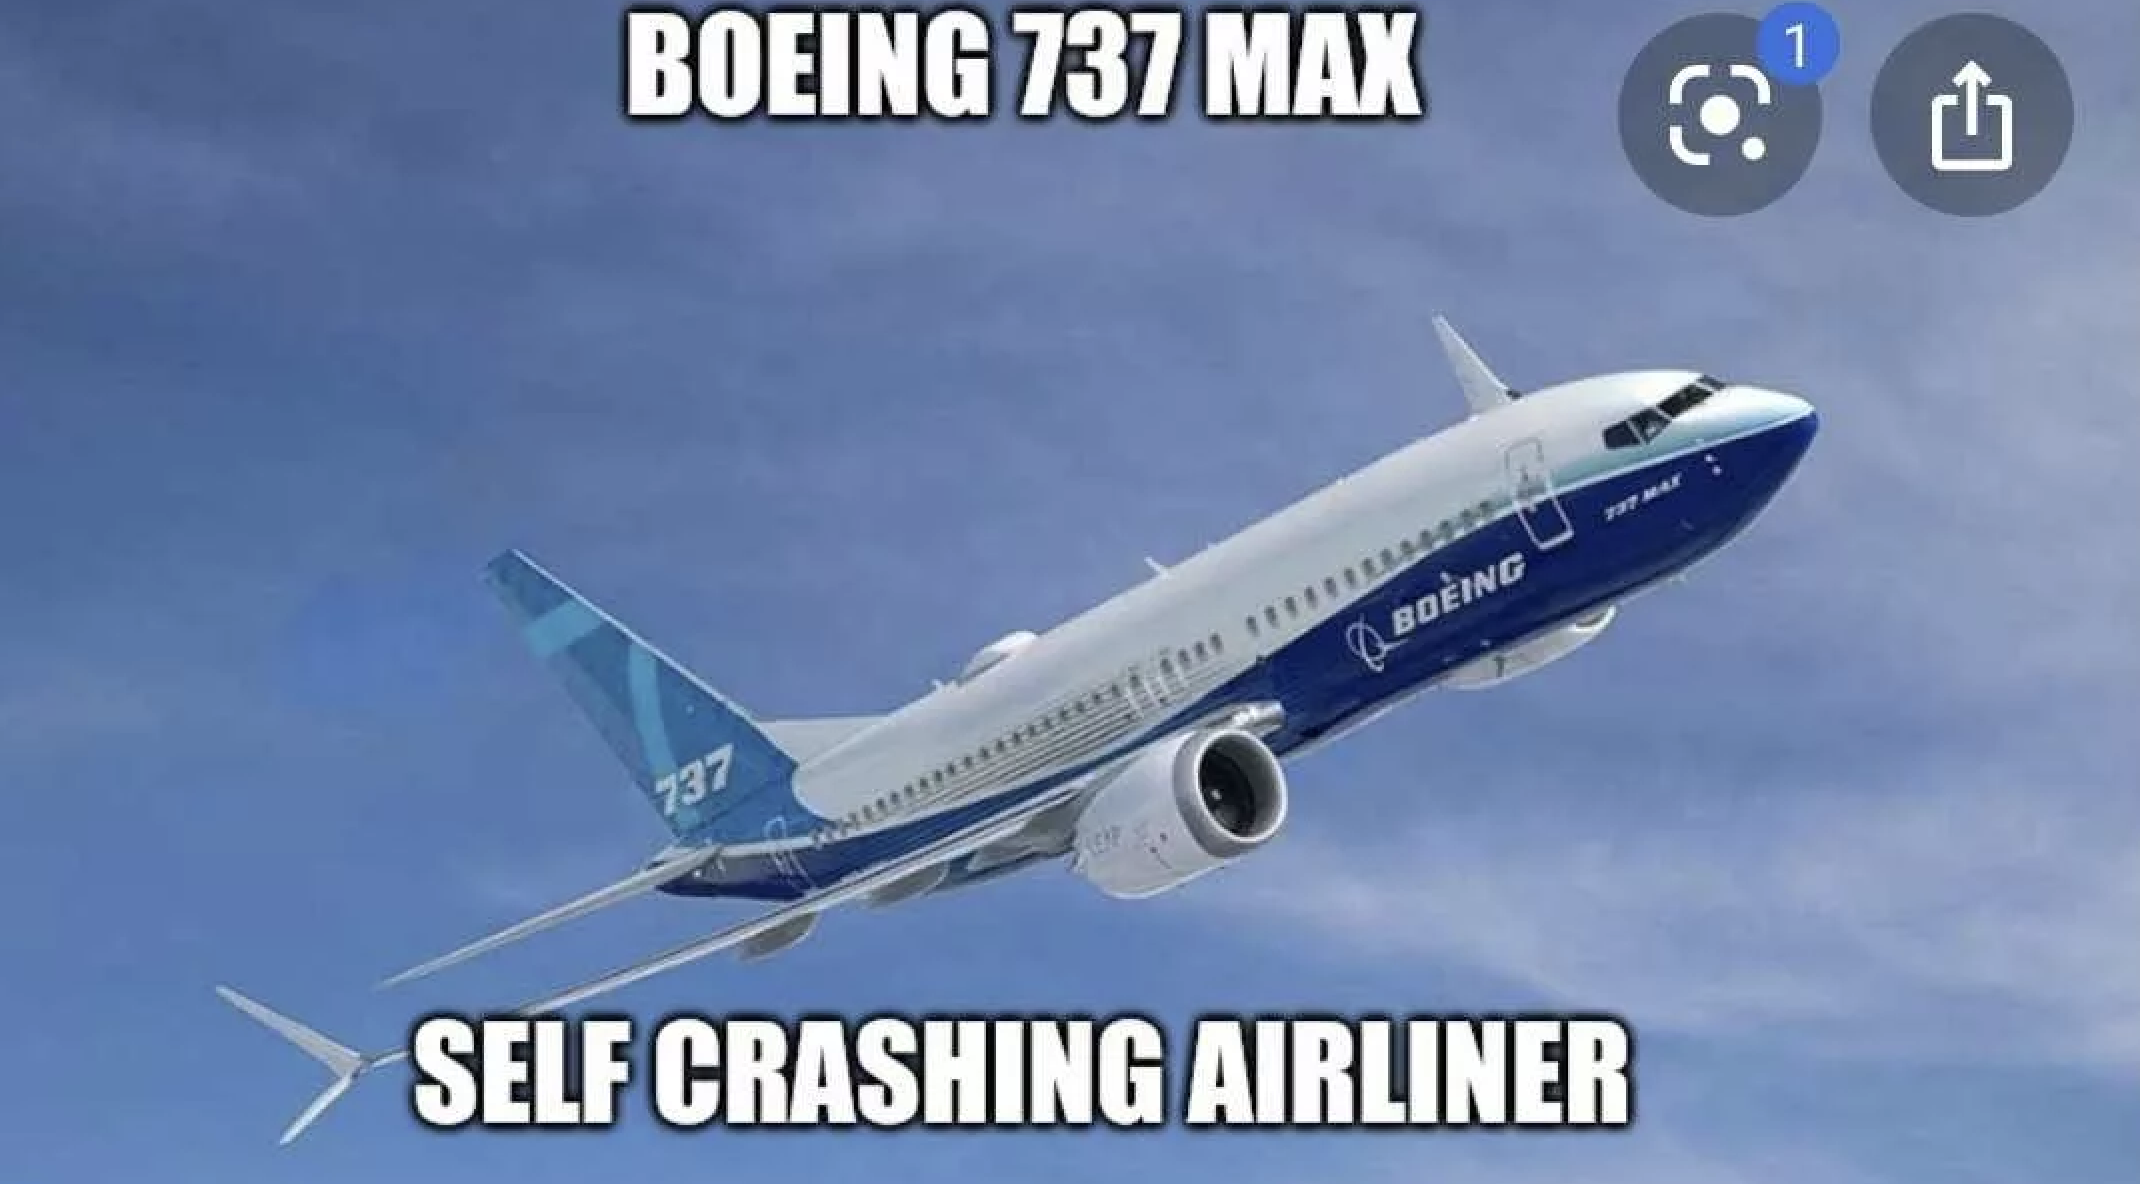 b737 max boeing - Boeing 737 Max 737 Boeing Self Crashing Airliner 1